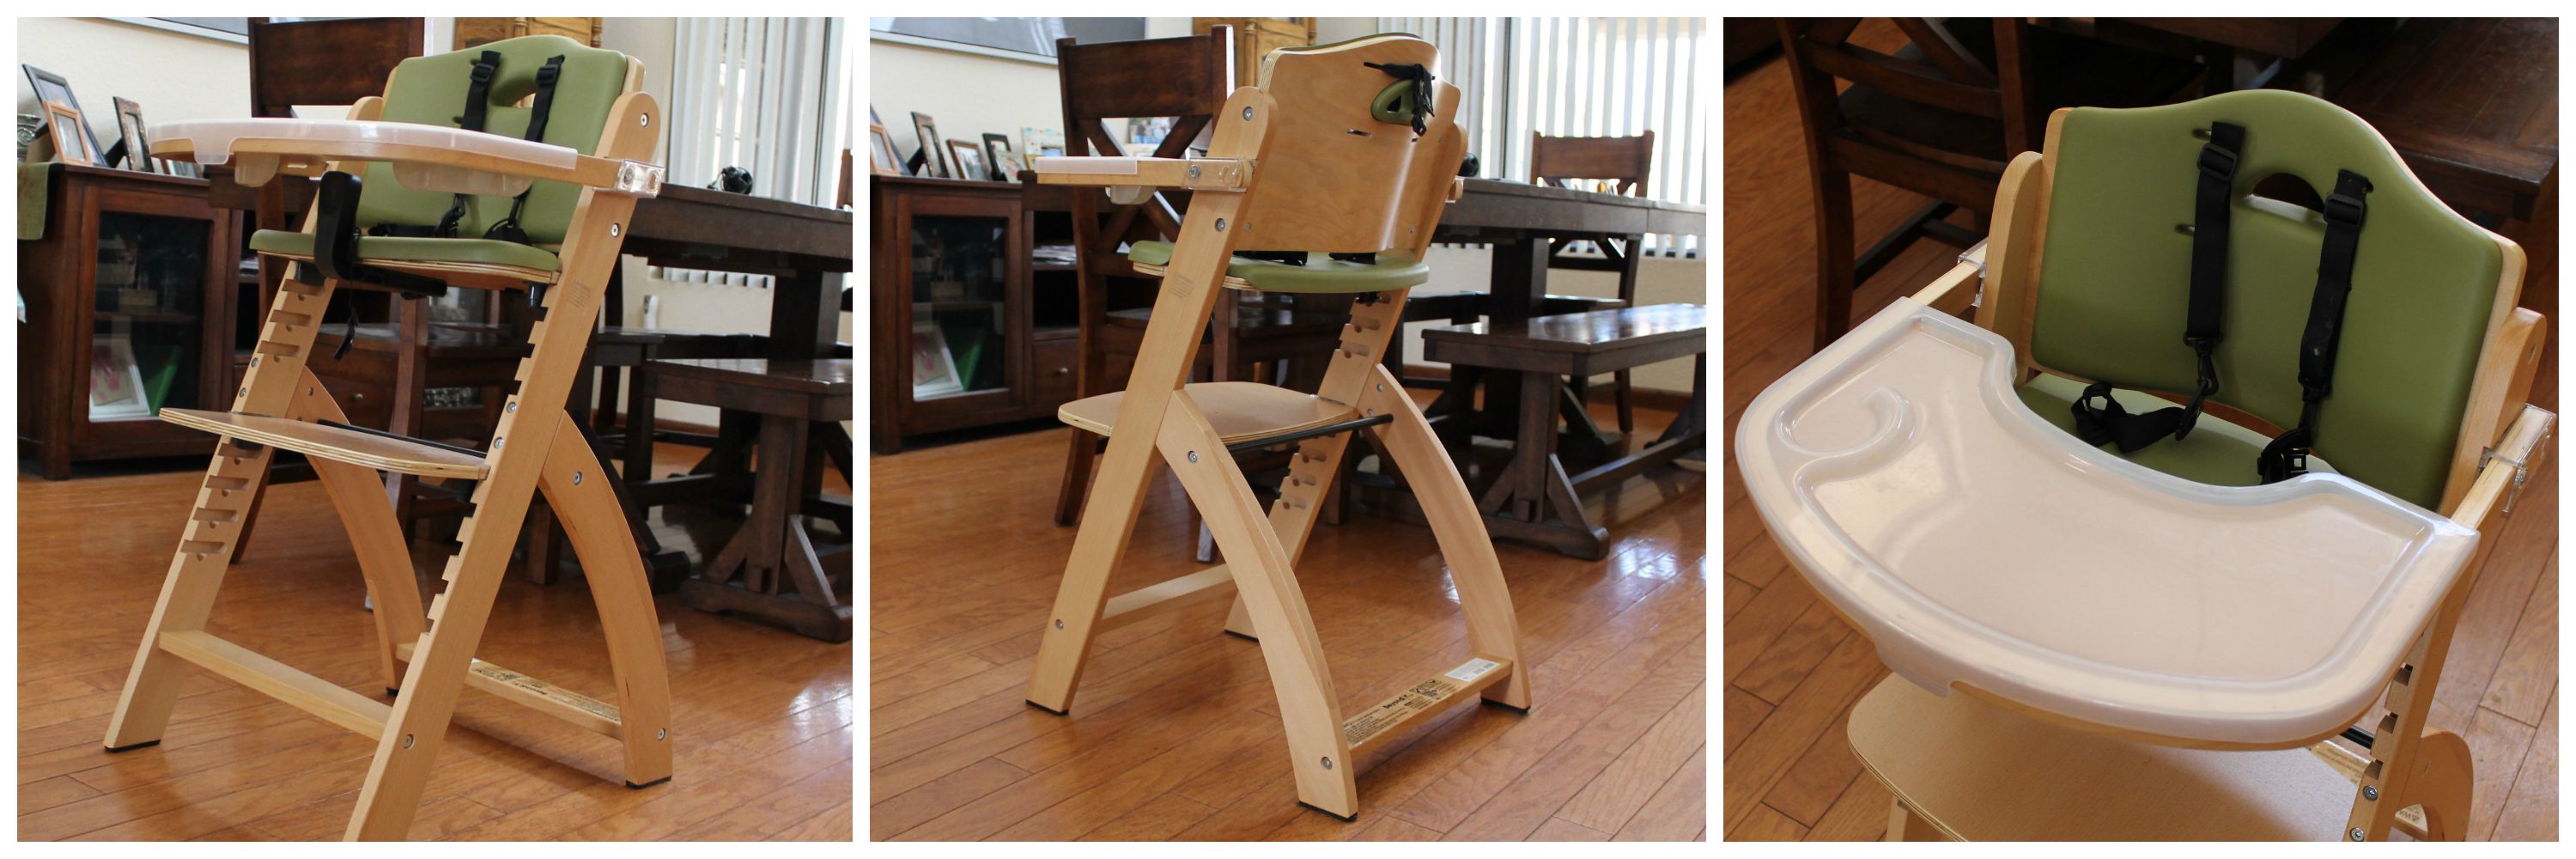 abiie beyond wooden high chair